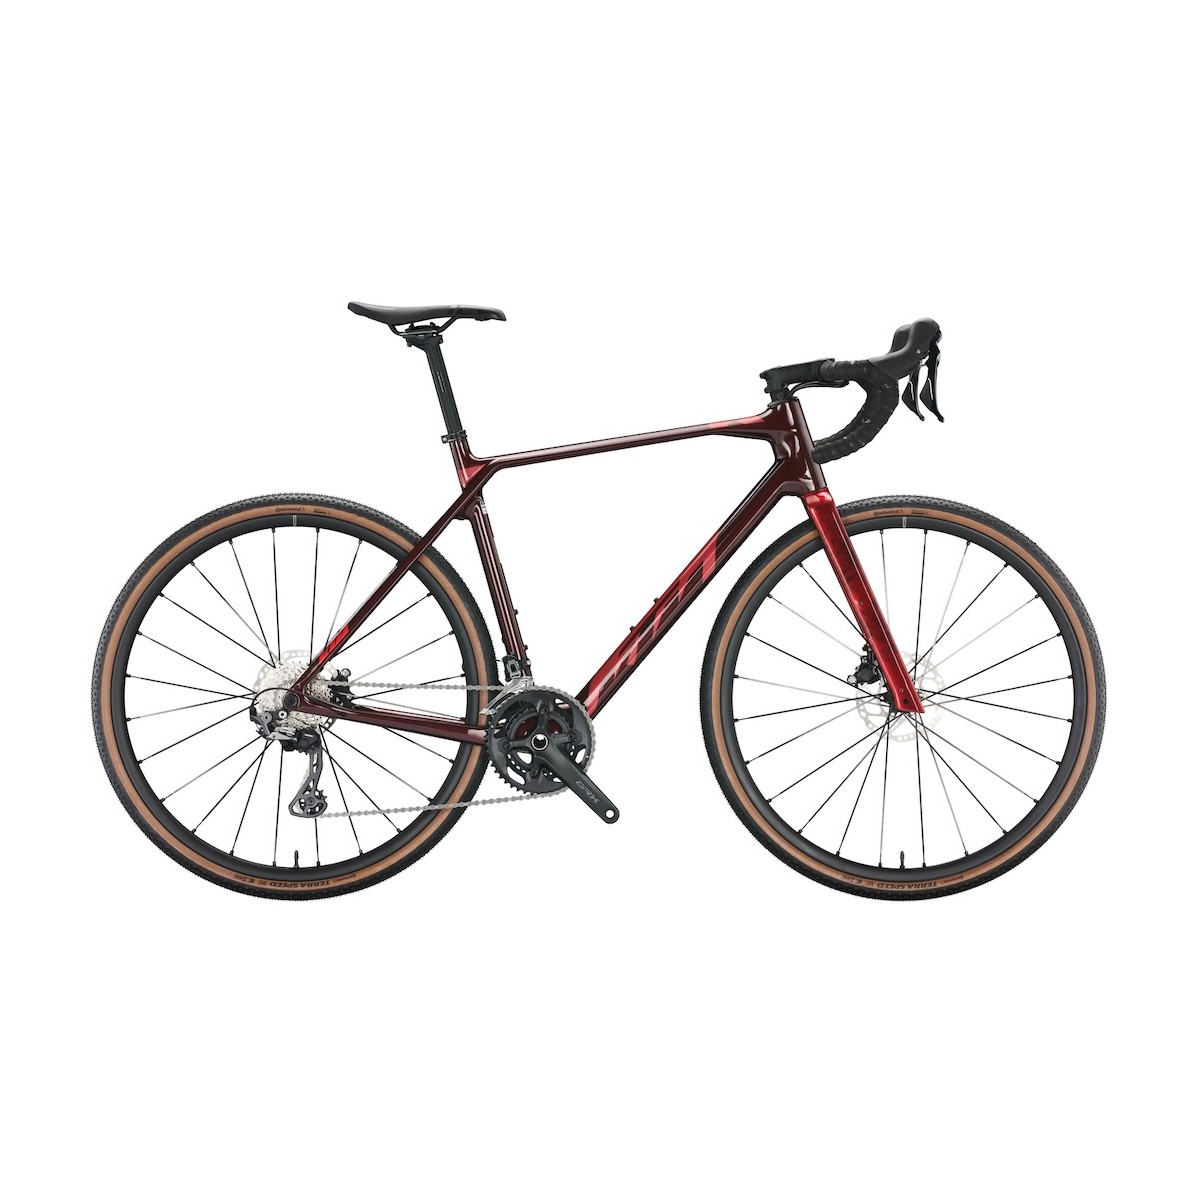 KTM X-STRADA ELITE gravel bicycle - bordo/red - 2022